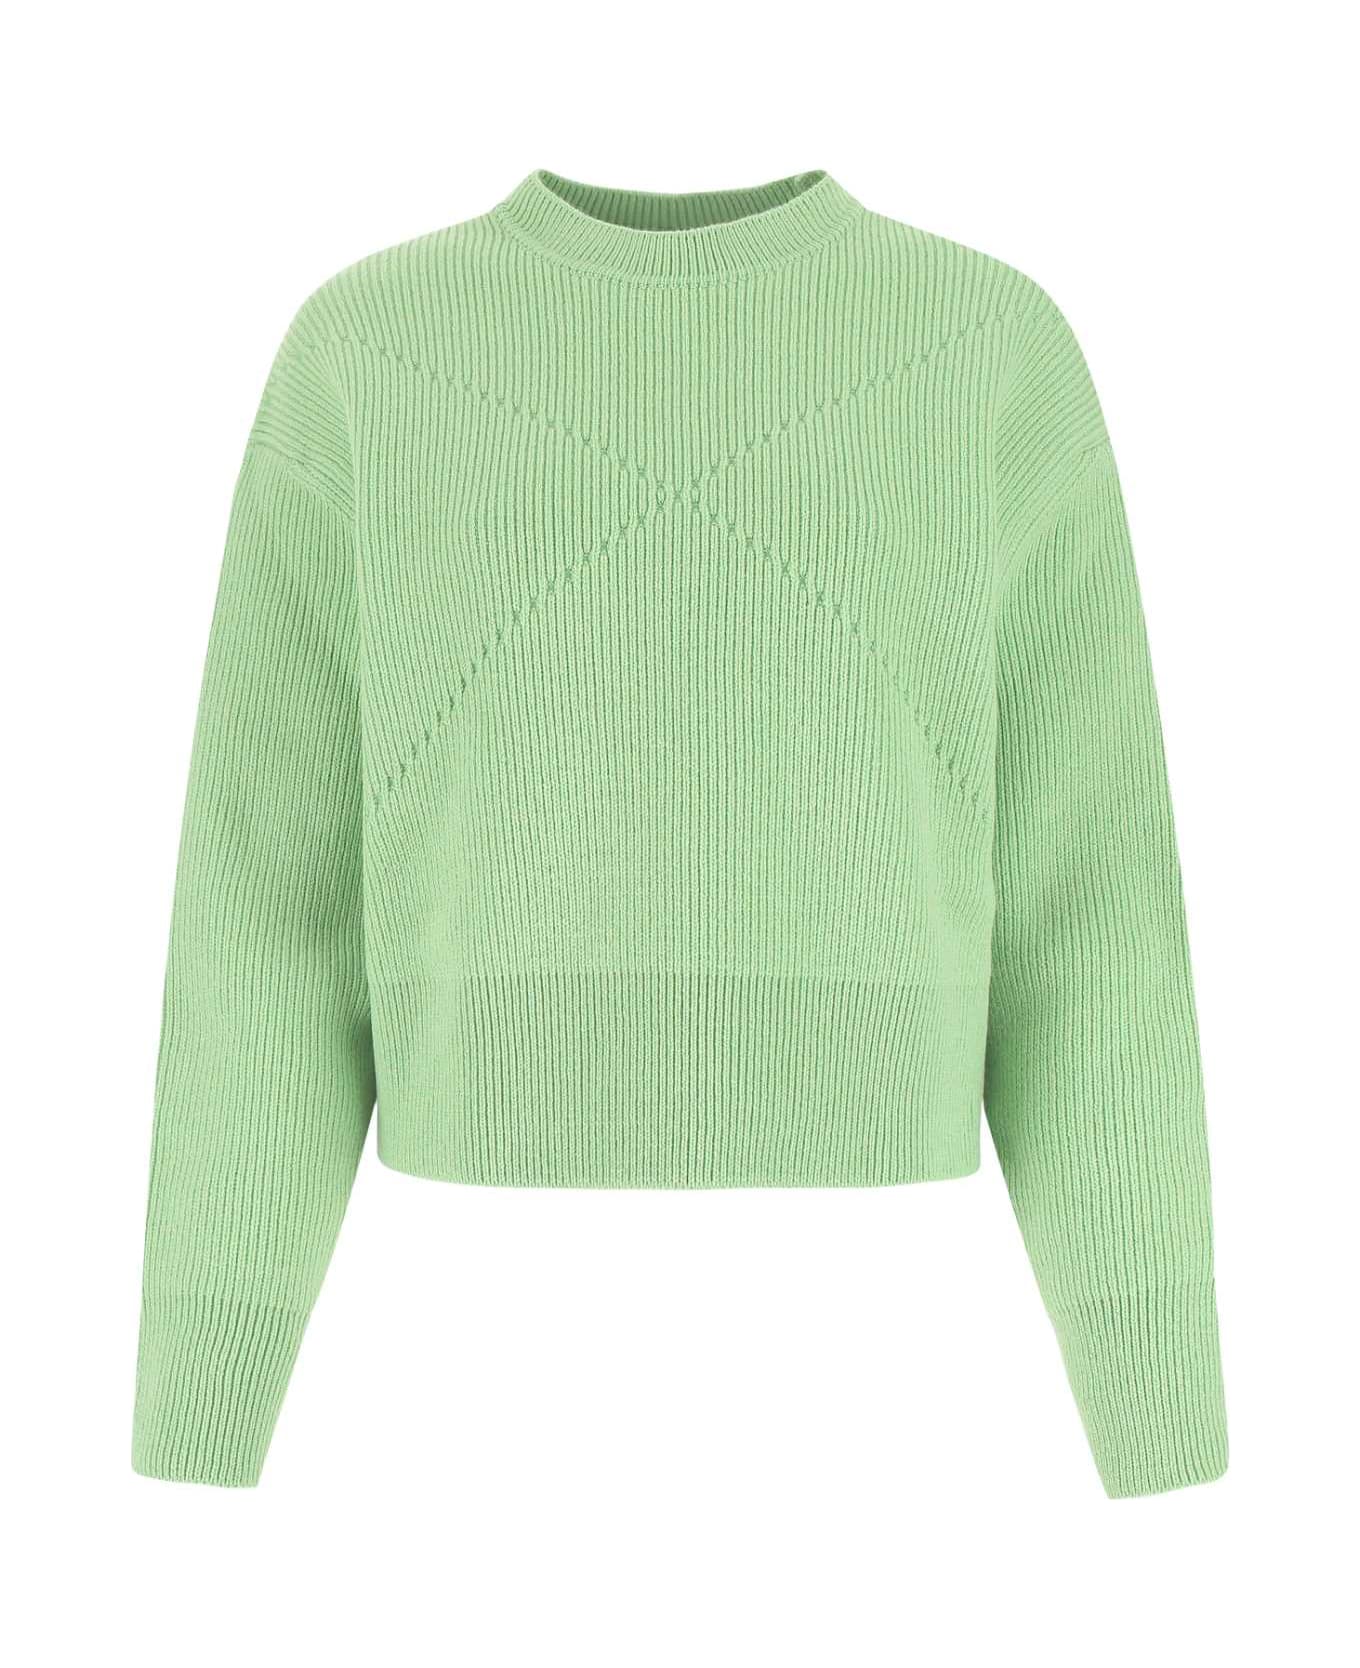 Bottega Veneta Pastel Green Stretch Cashmere Blend Sweater - 3516